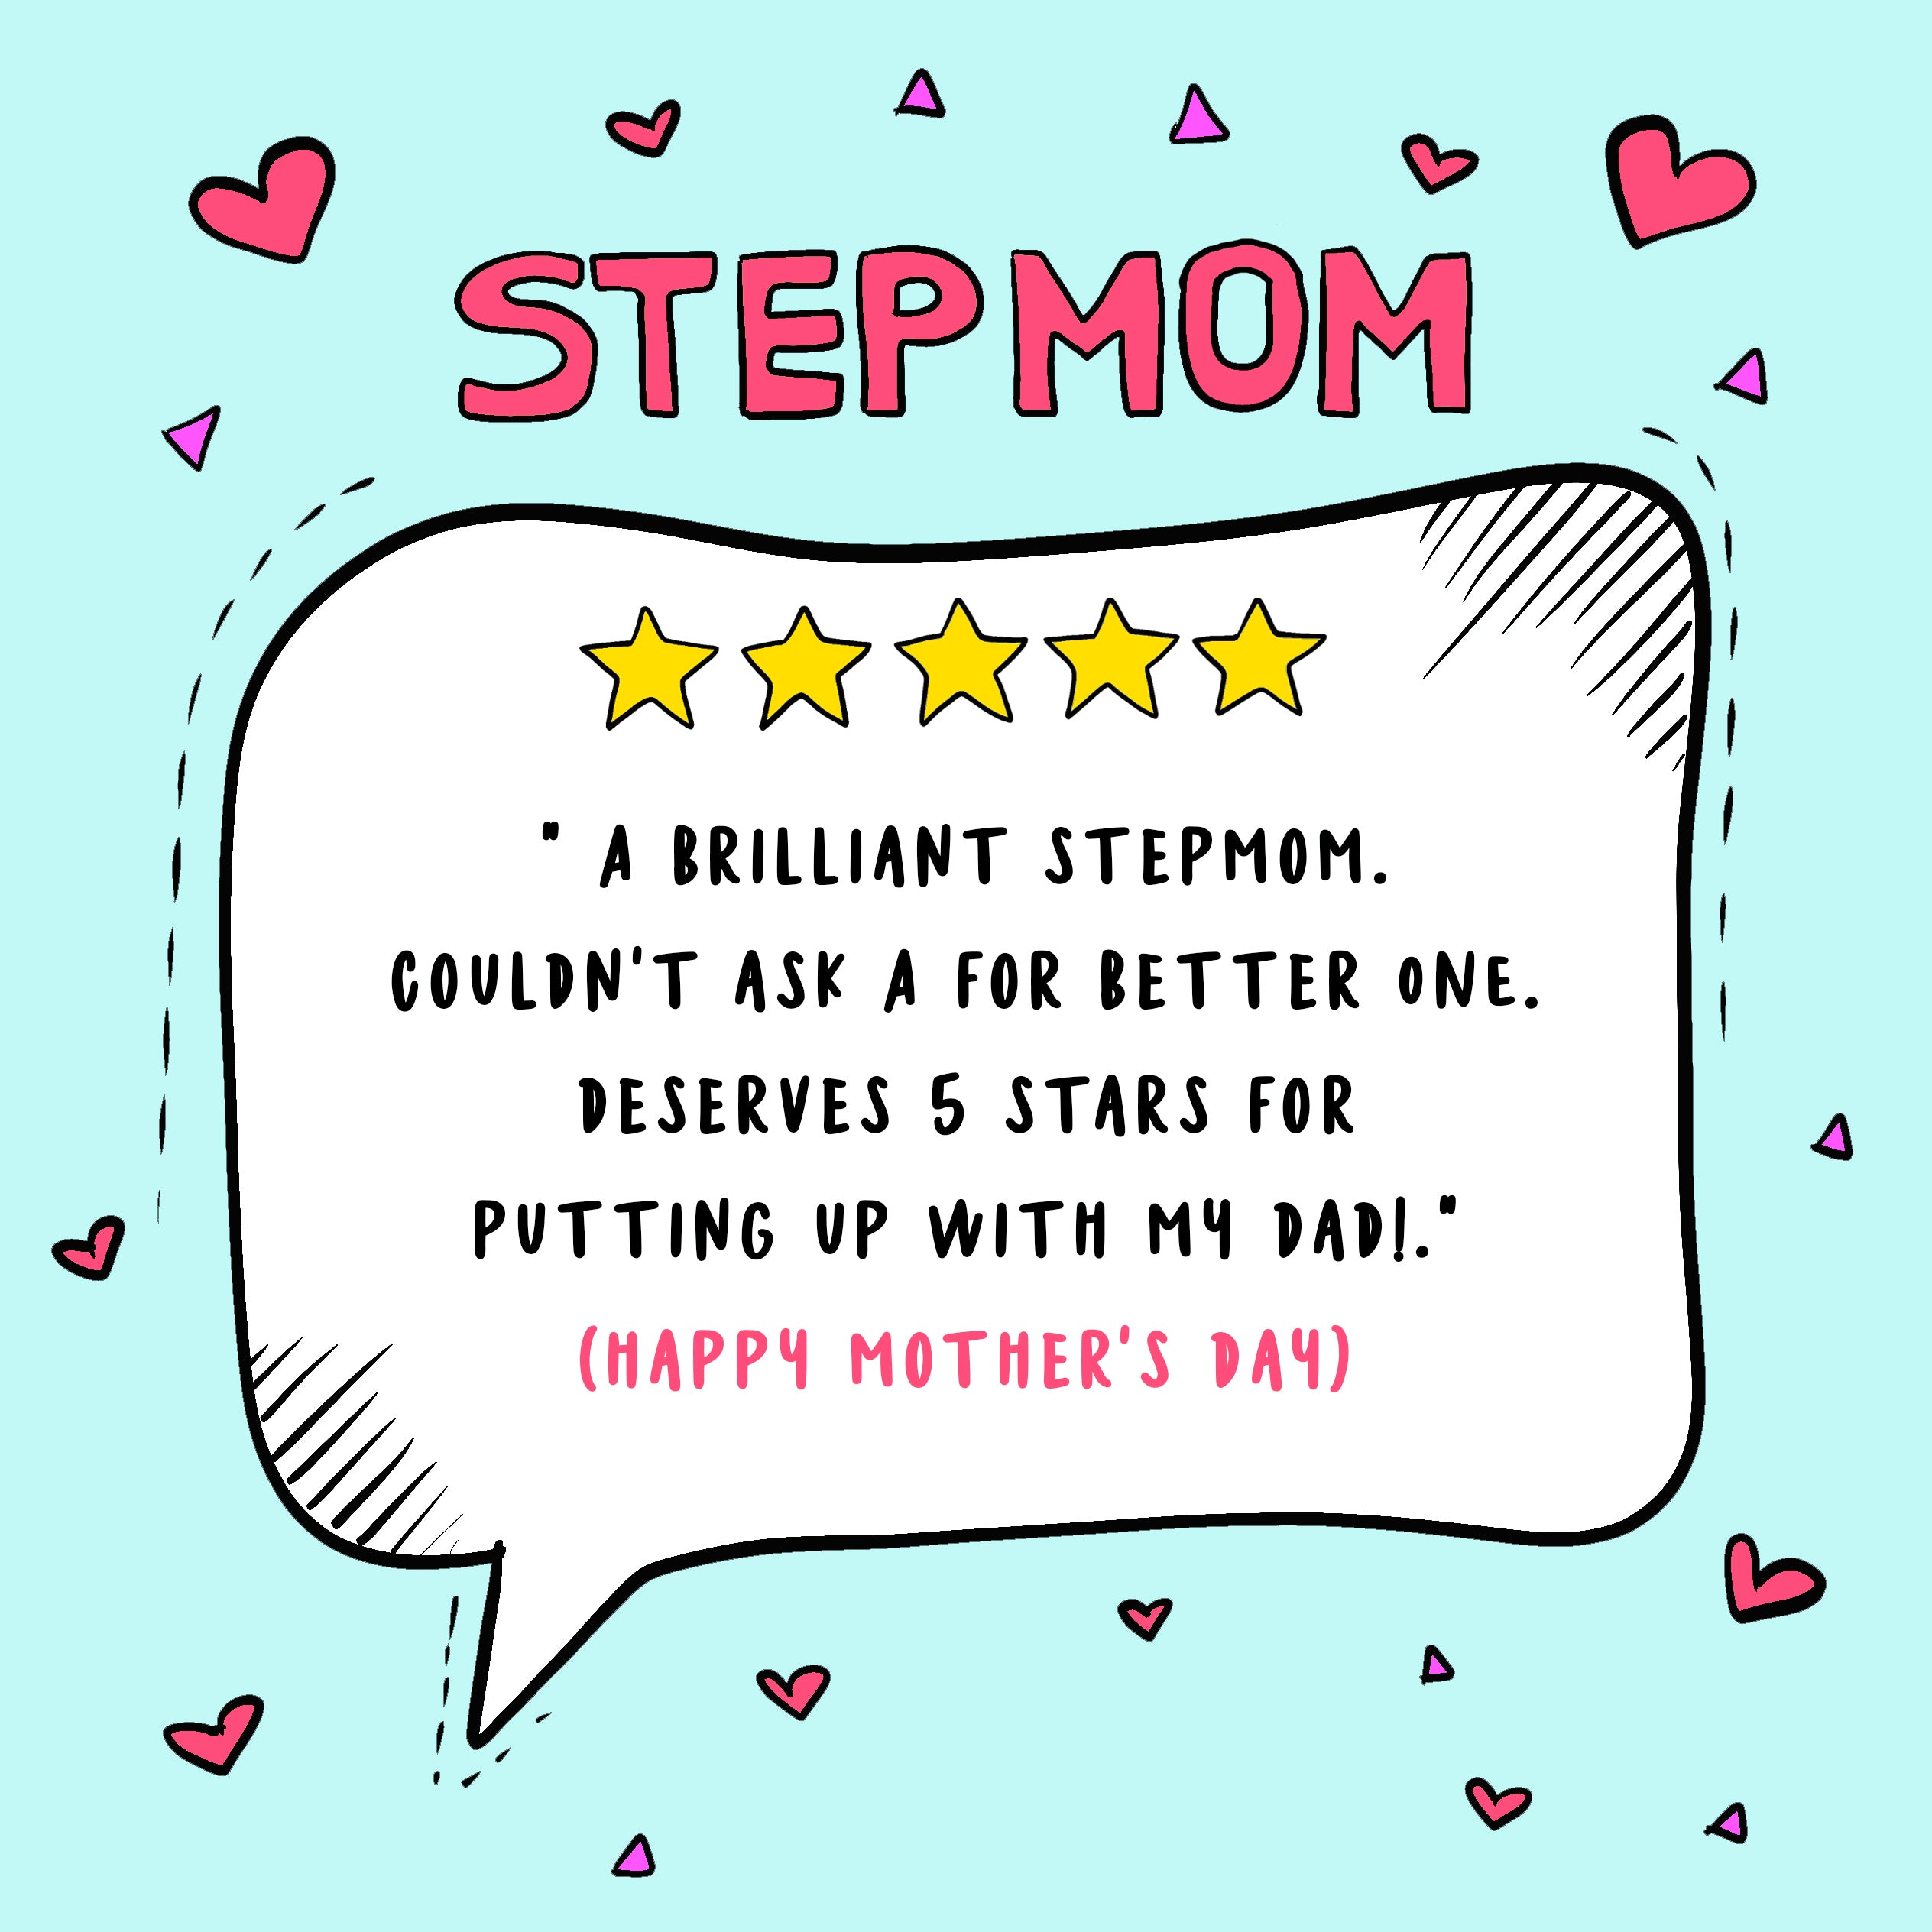 happy-mother-s-day-5-stars-stepmom-card-boomf